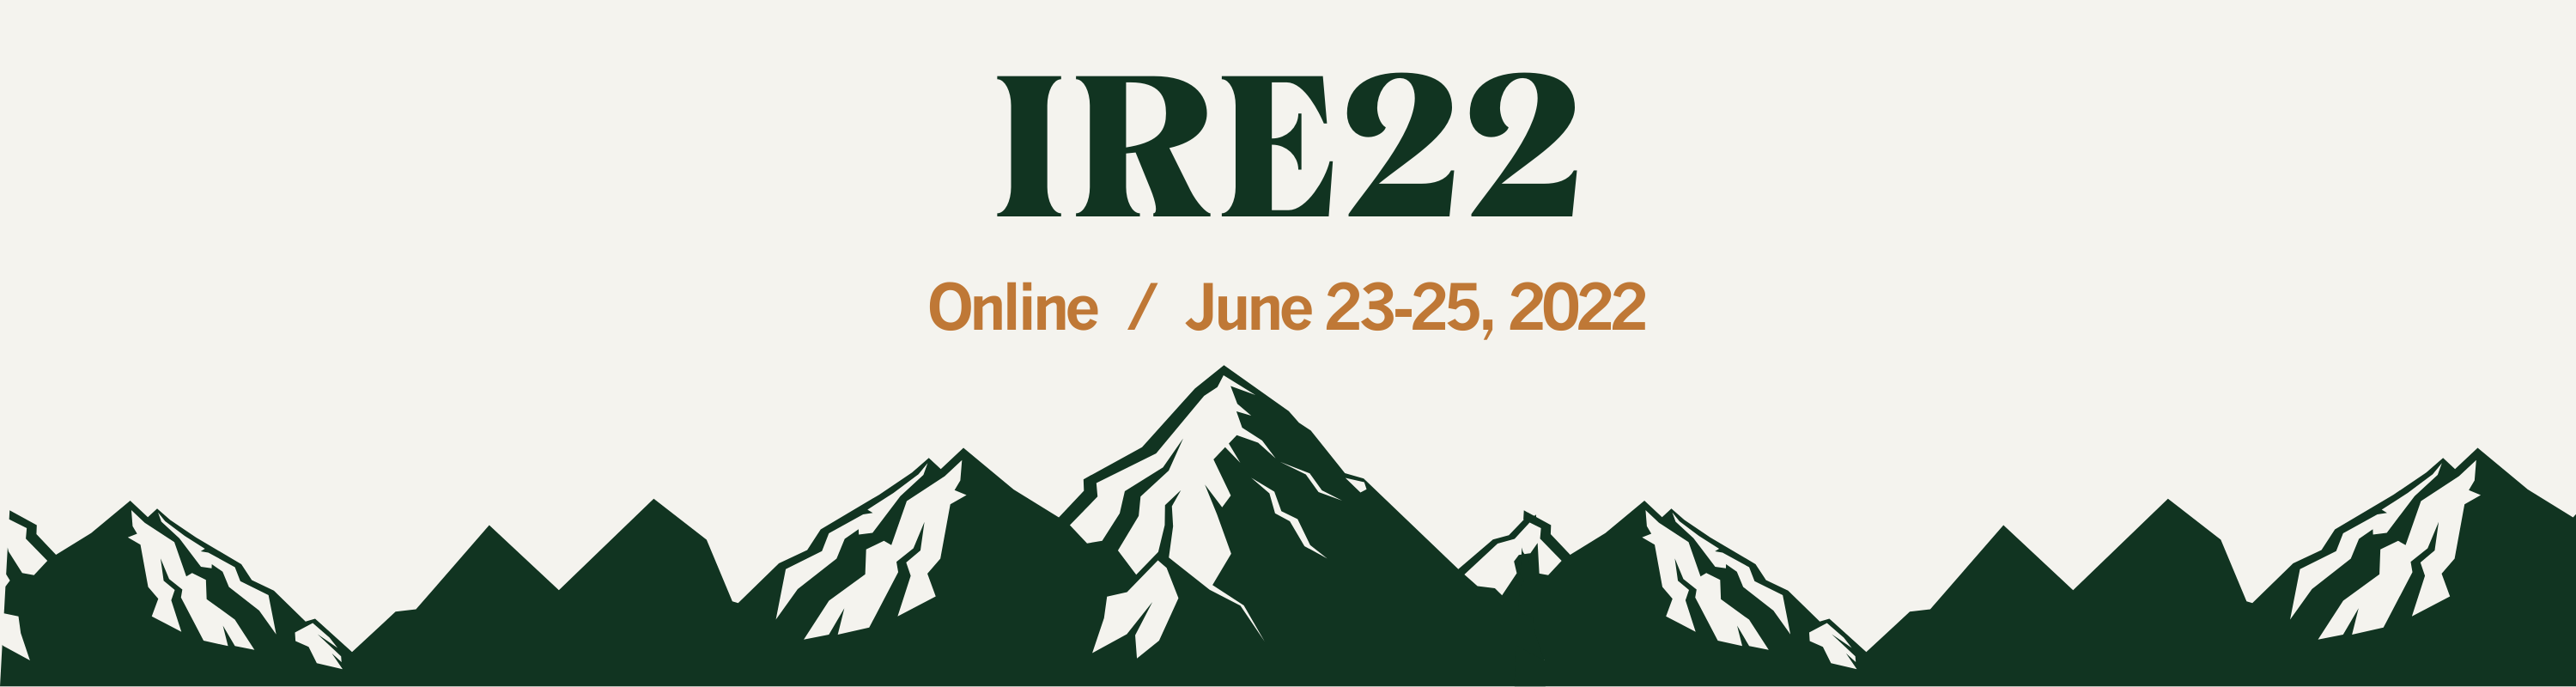 IRE 2022 virtual conference logo